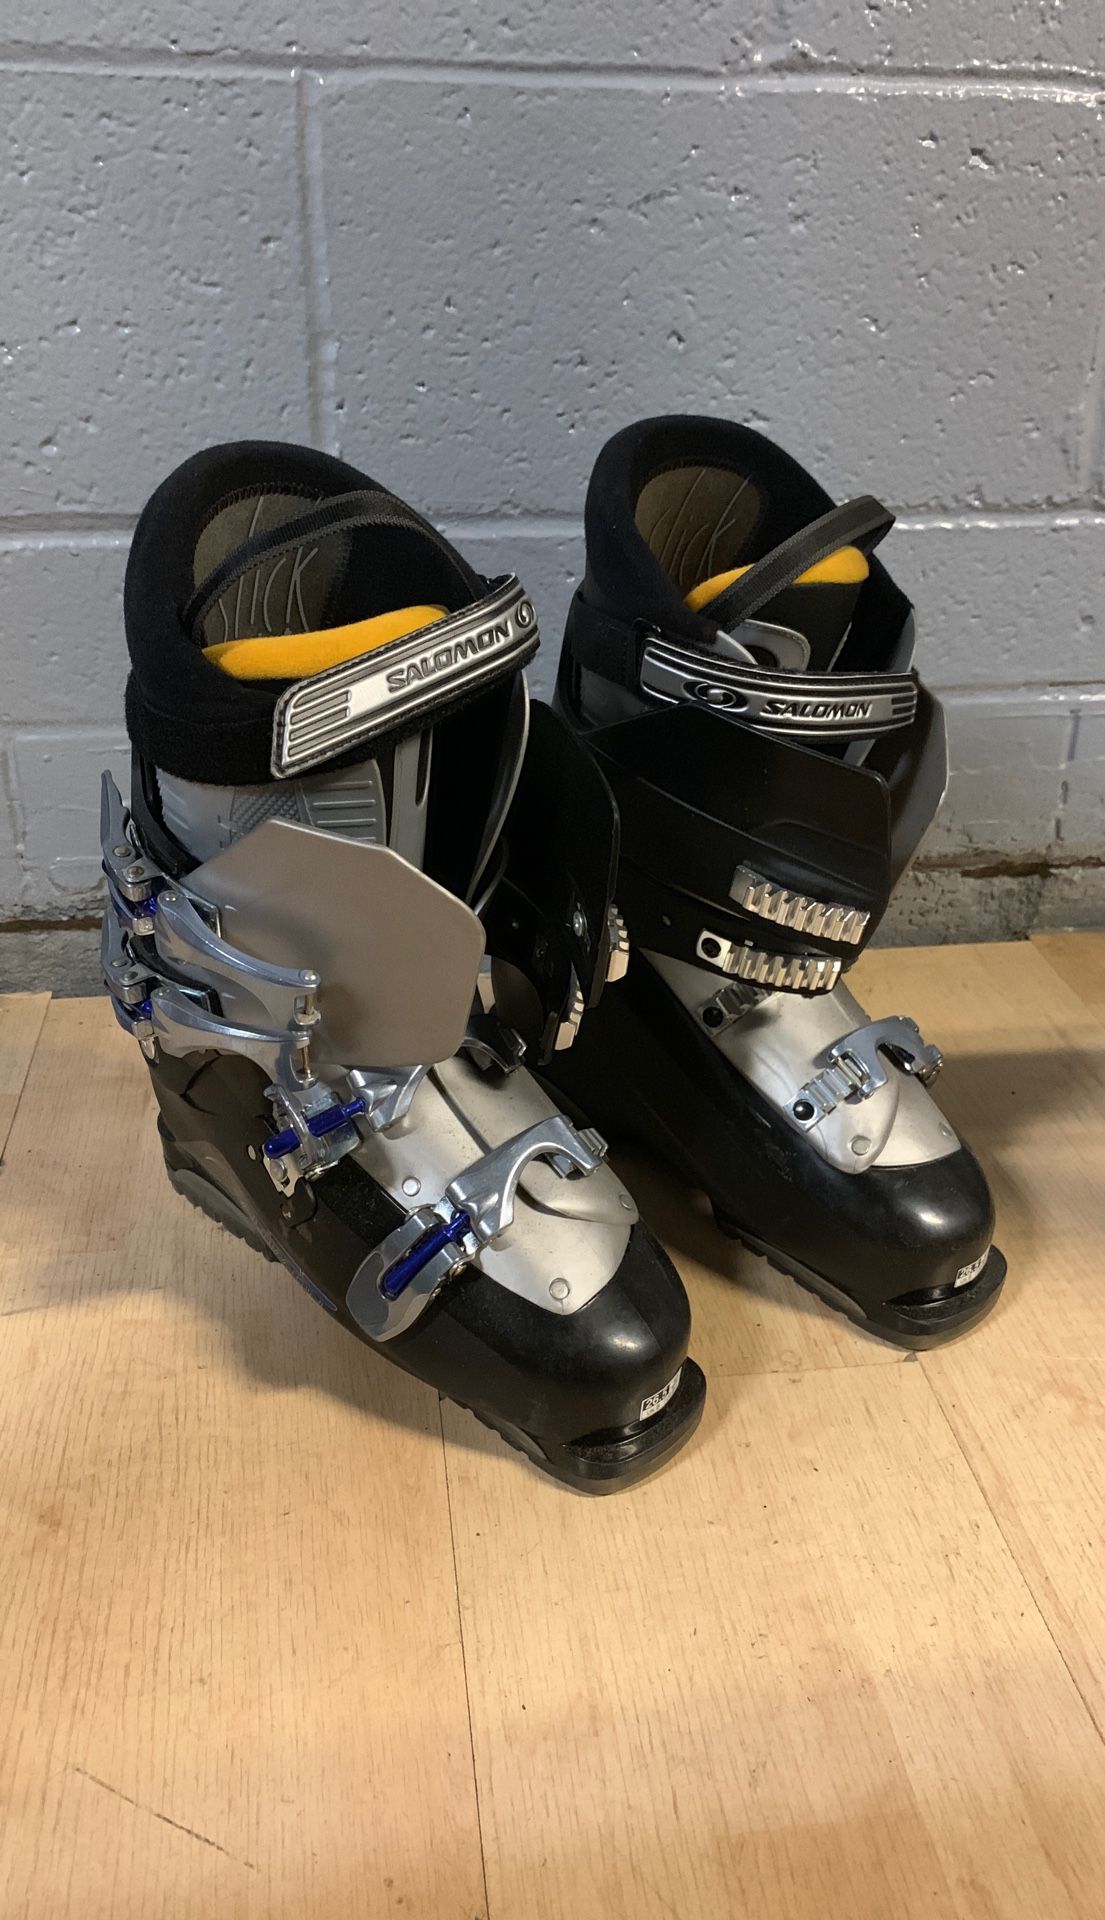 Snow ski boots